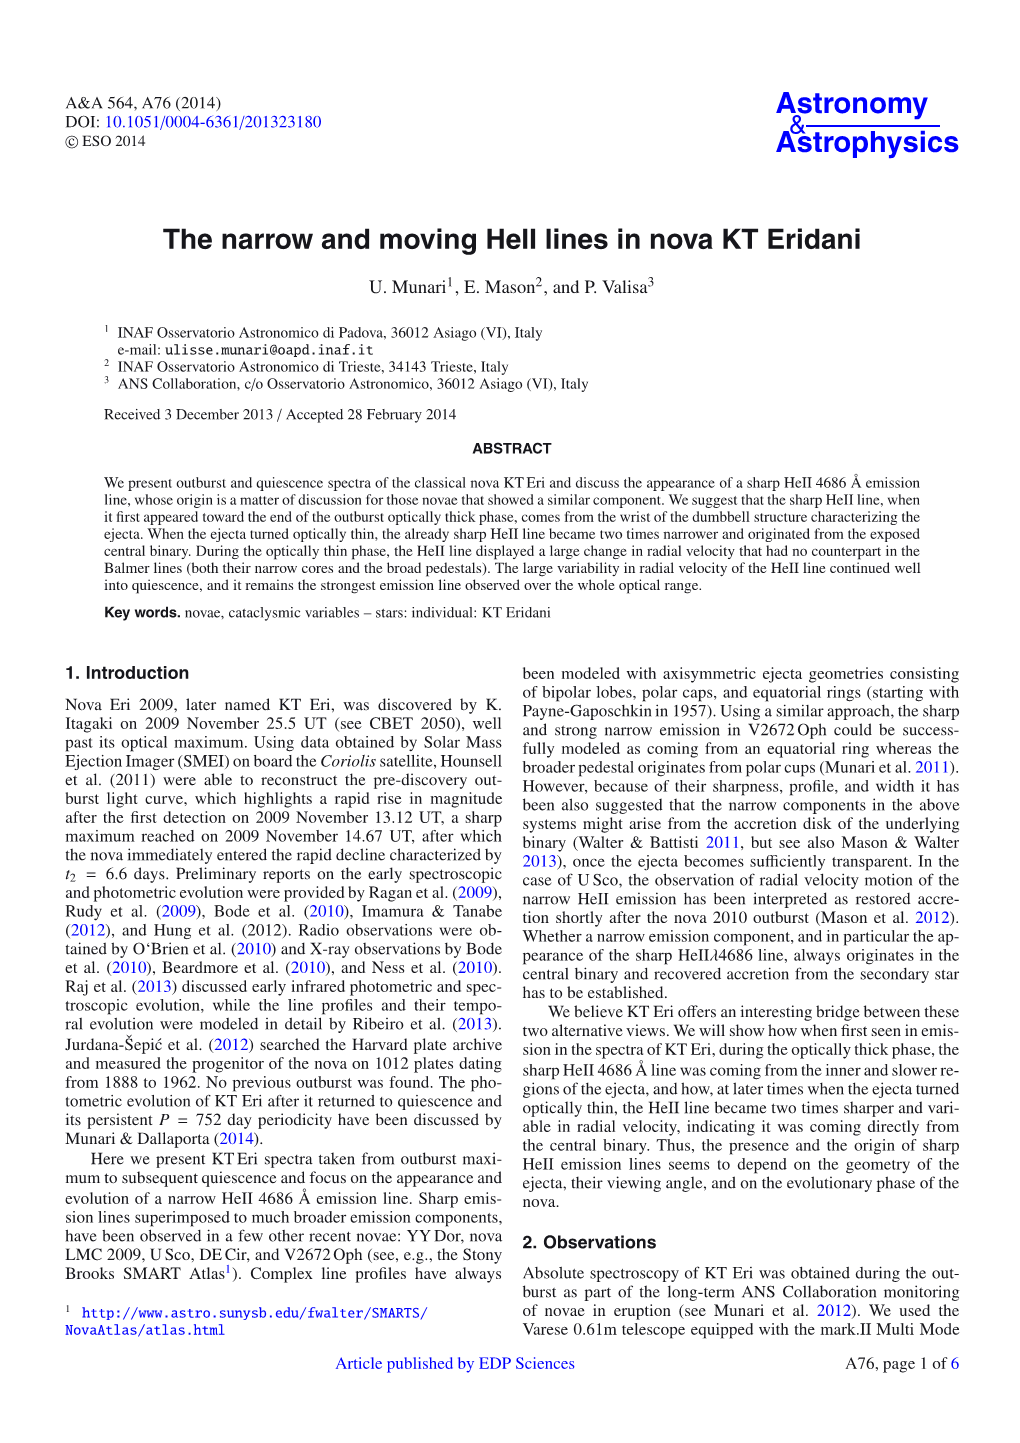 The Narrow and Moving Heii Lines in Nova KT Eridani